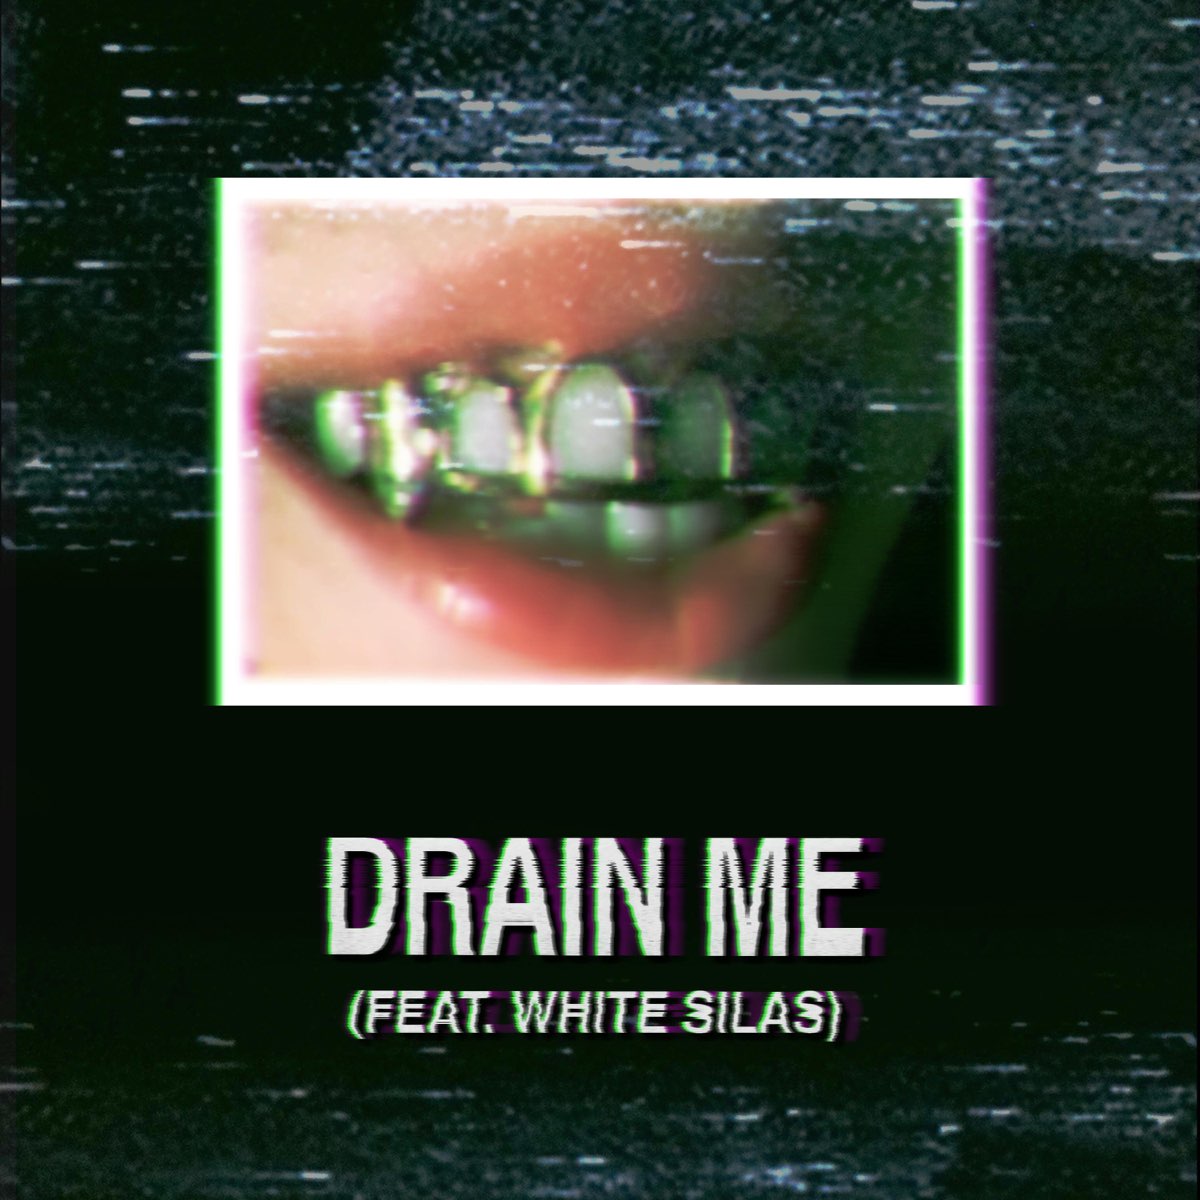 little triste featuring White Silas — drain me cover artwork